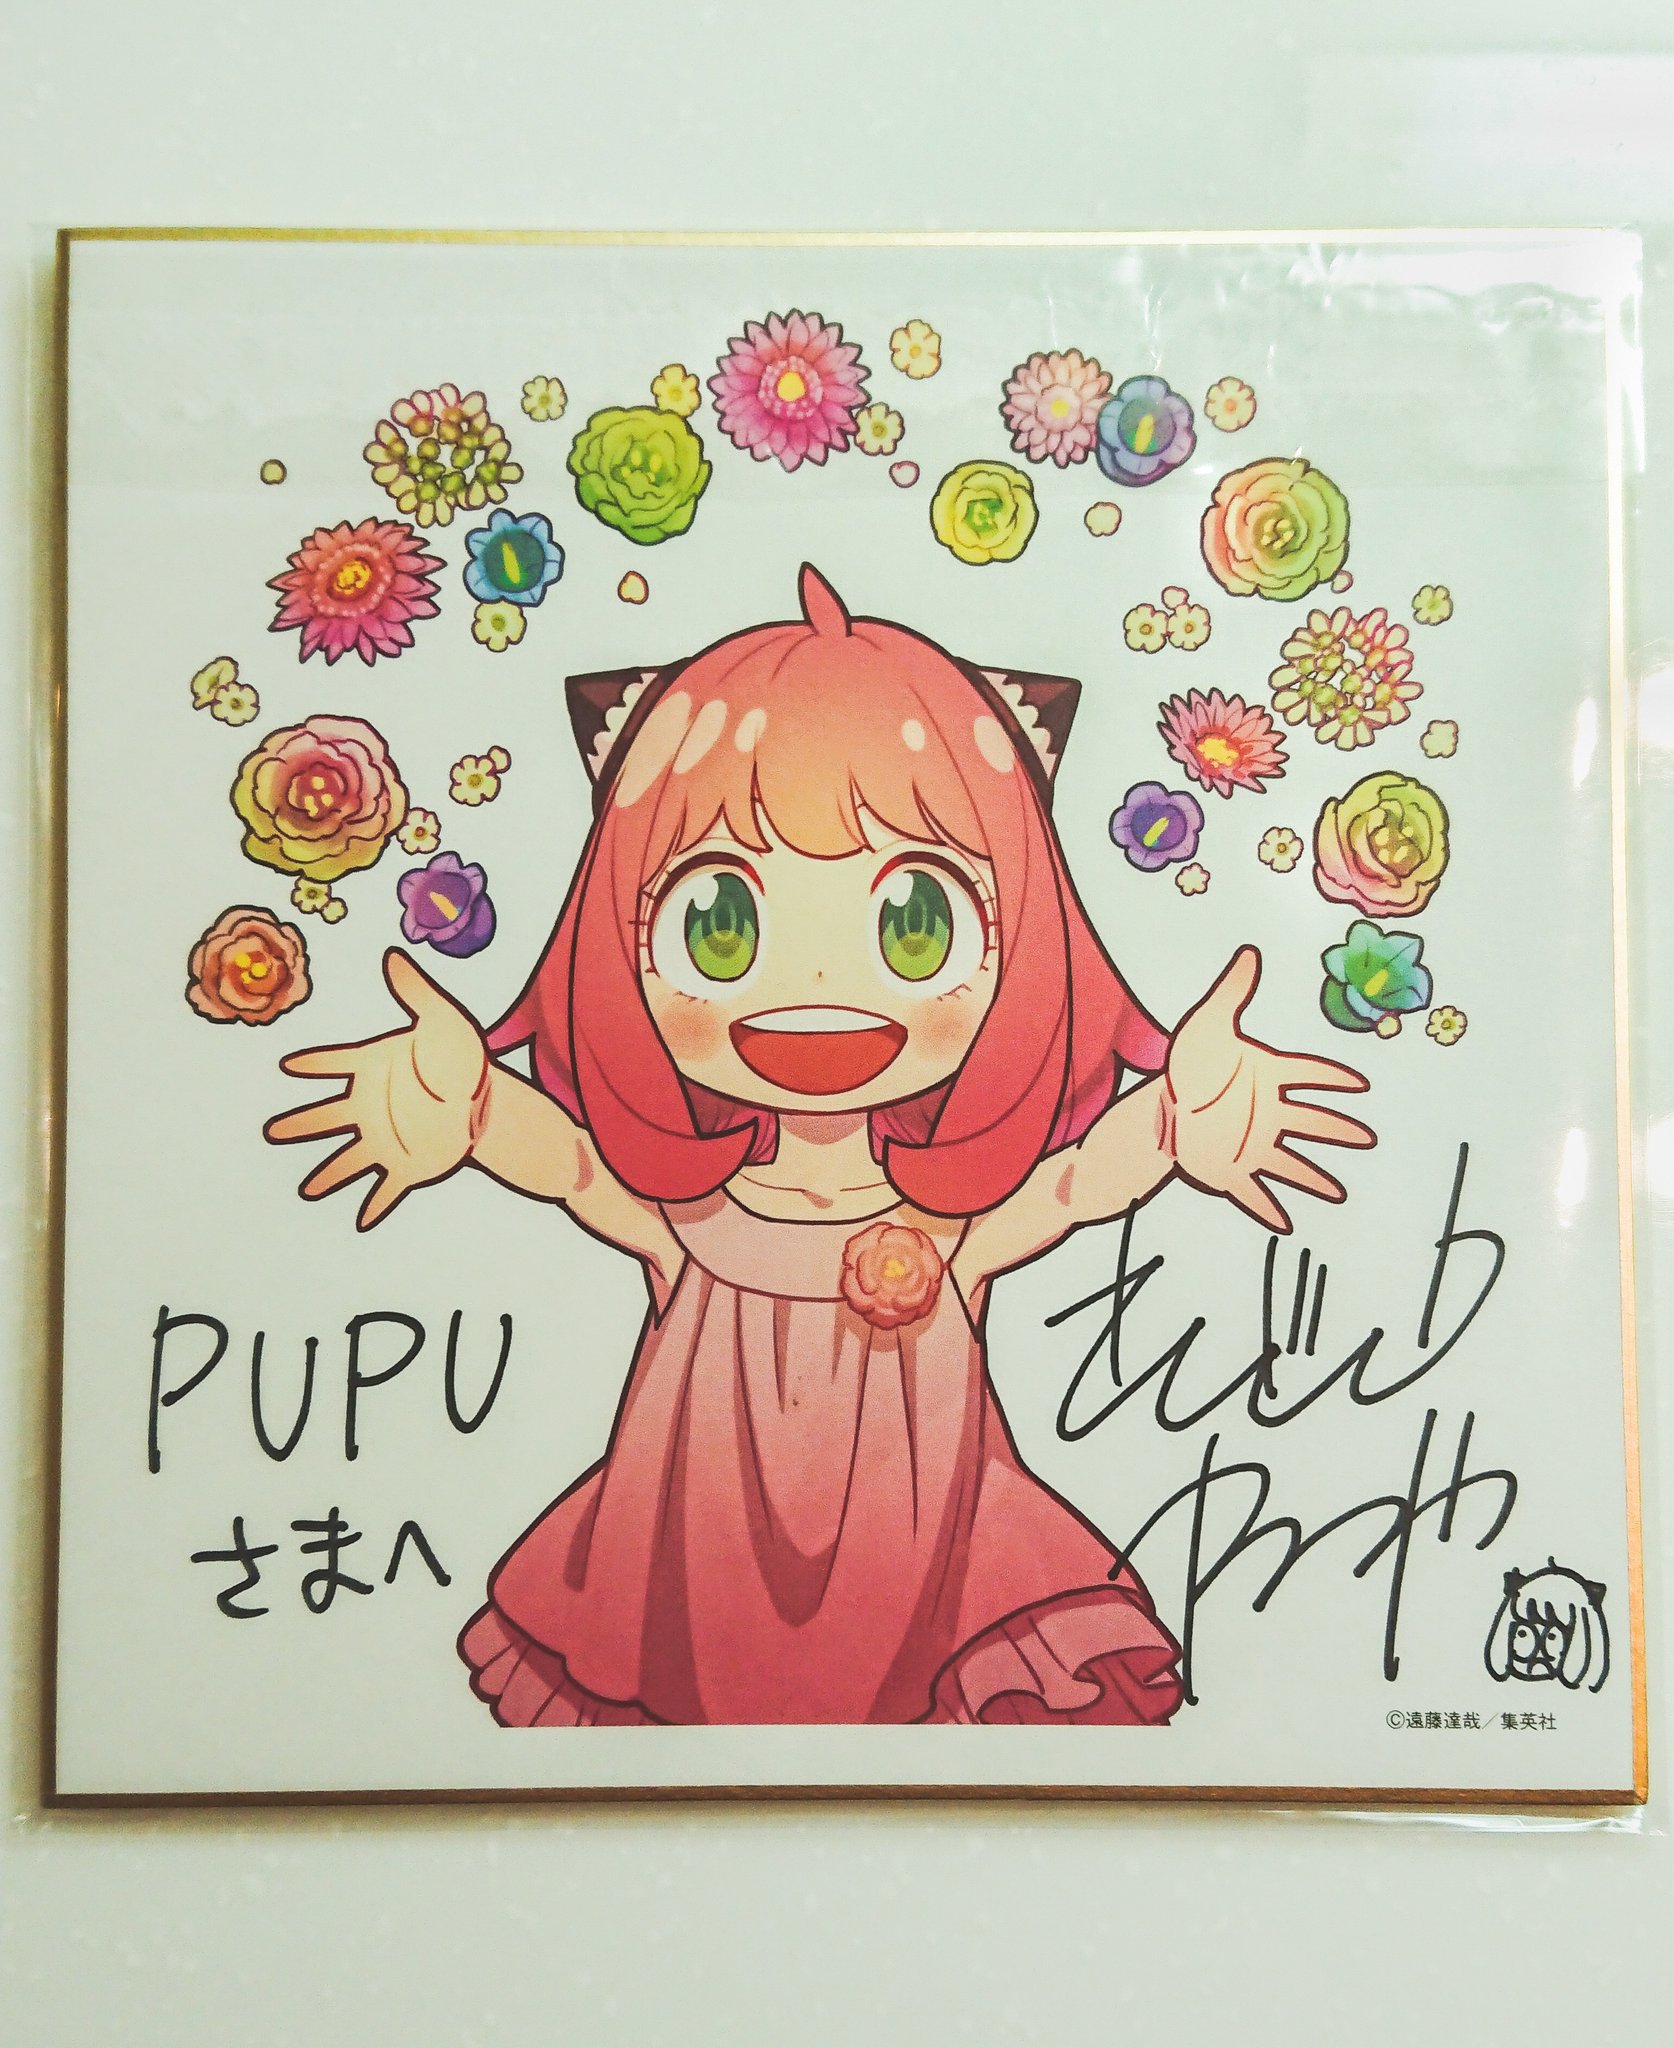 pupu様 専用 新素材新作 8990円 sandorobotics.com